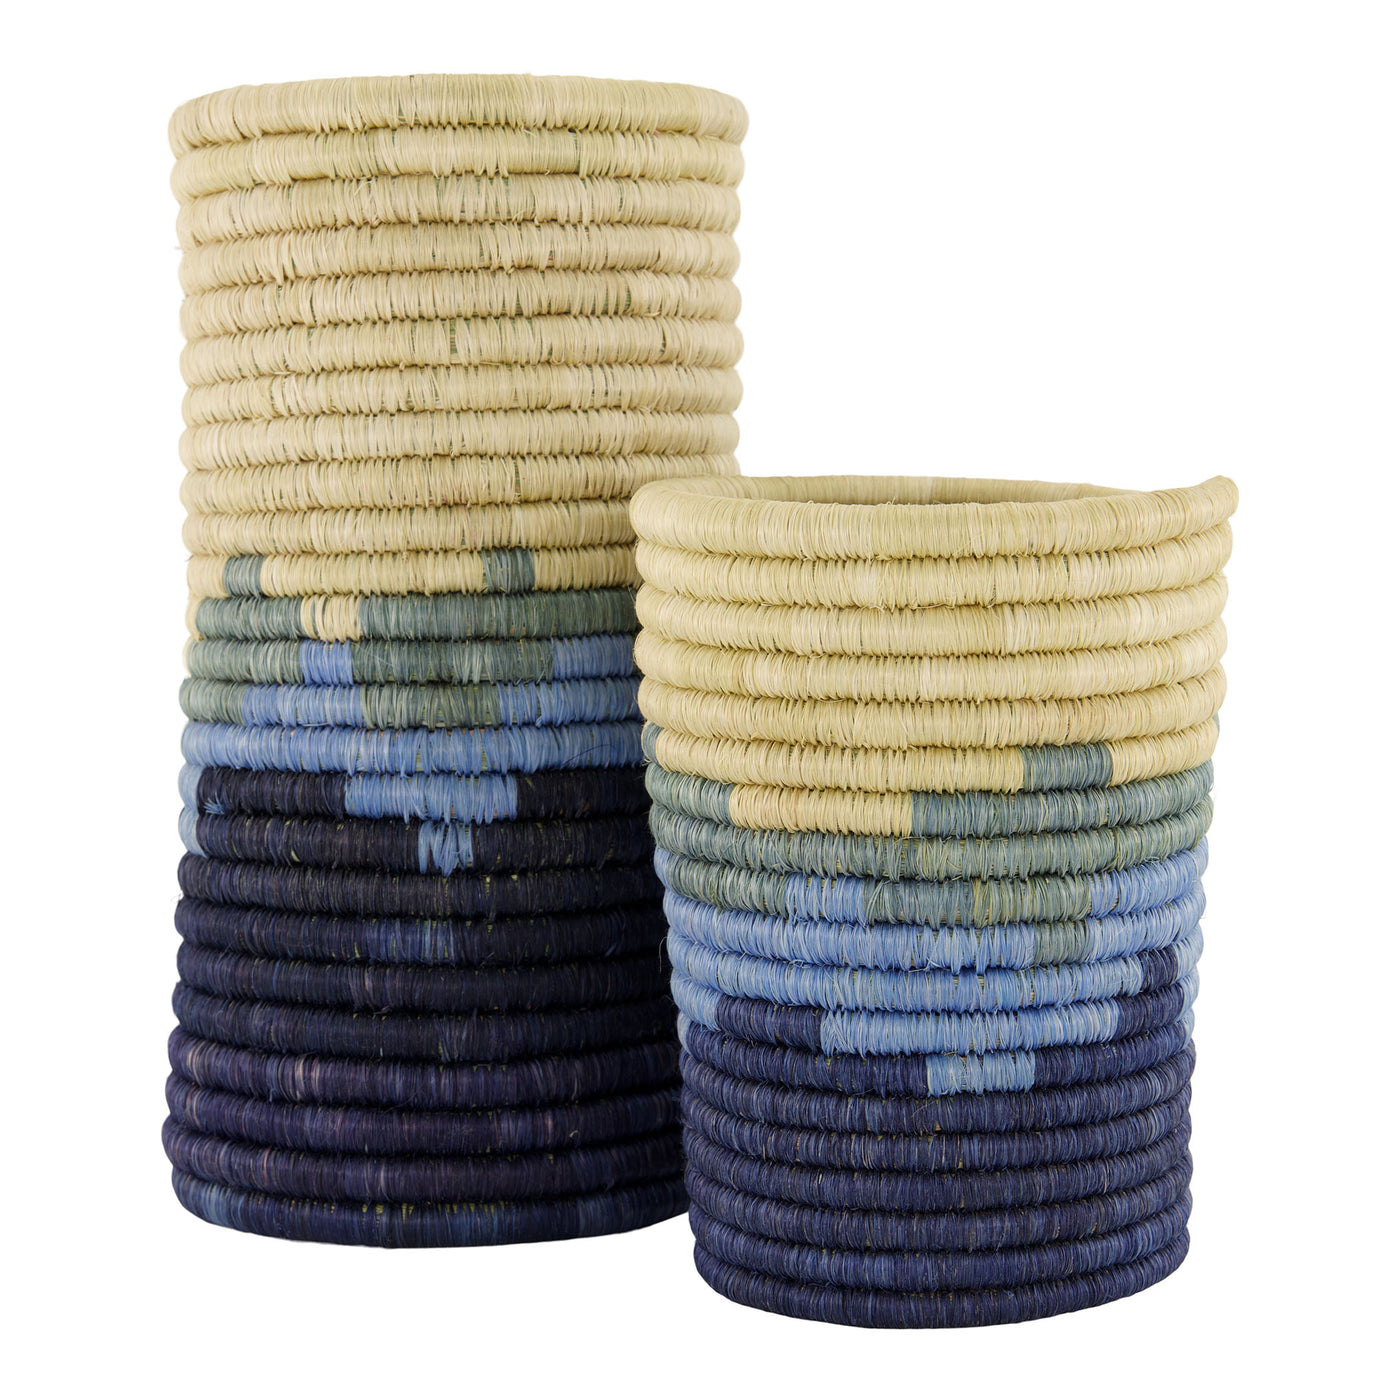 Coastal Vessels - Cylindrical Vases, Set of 2